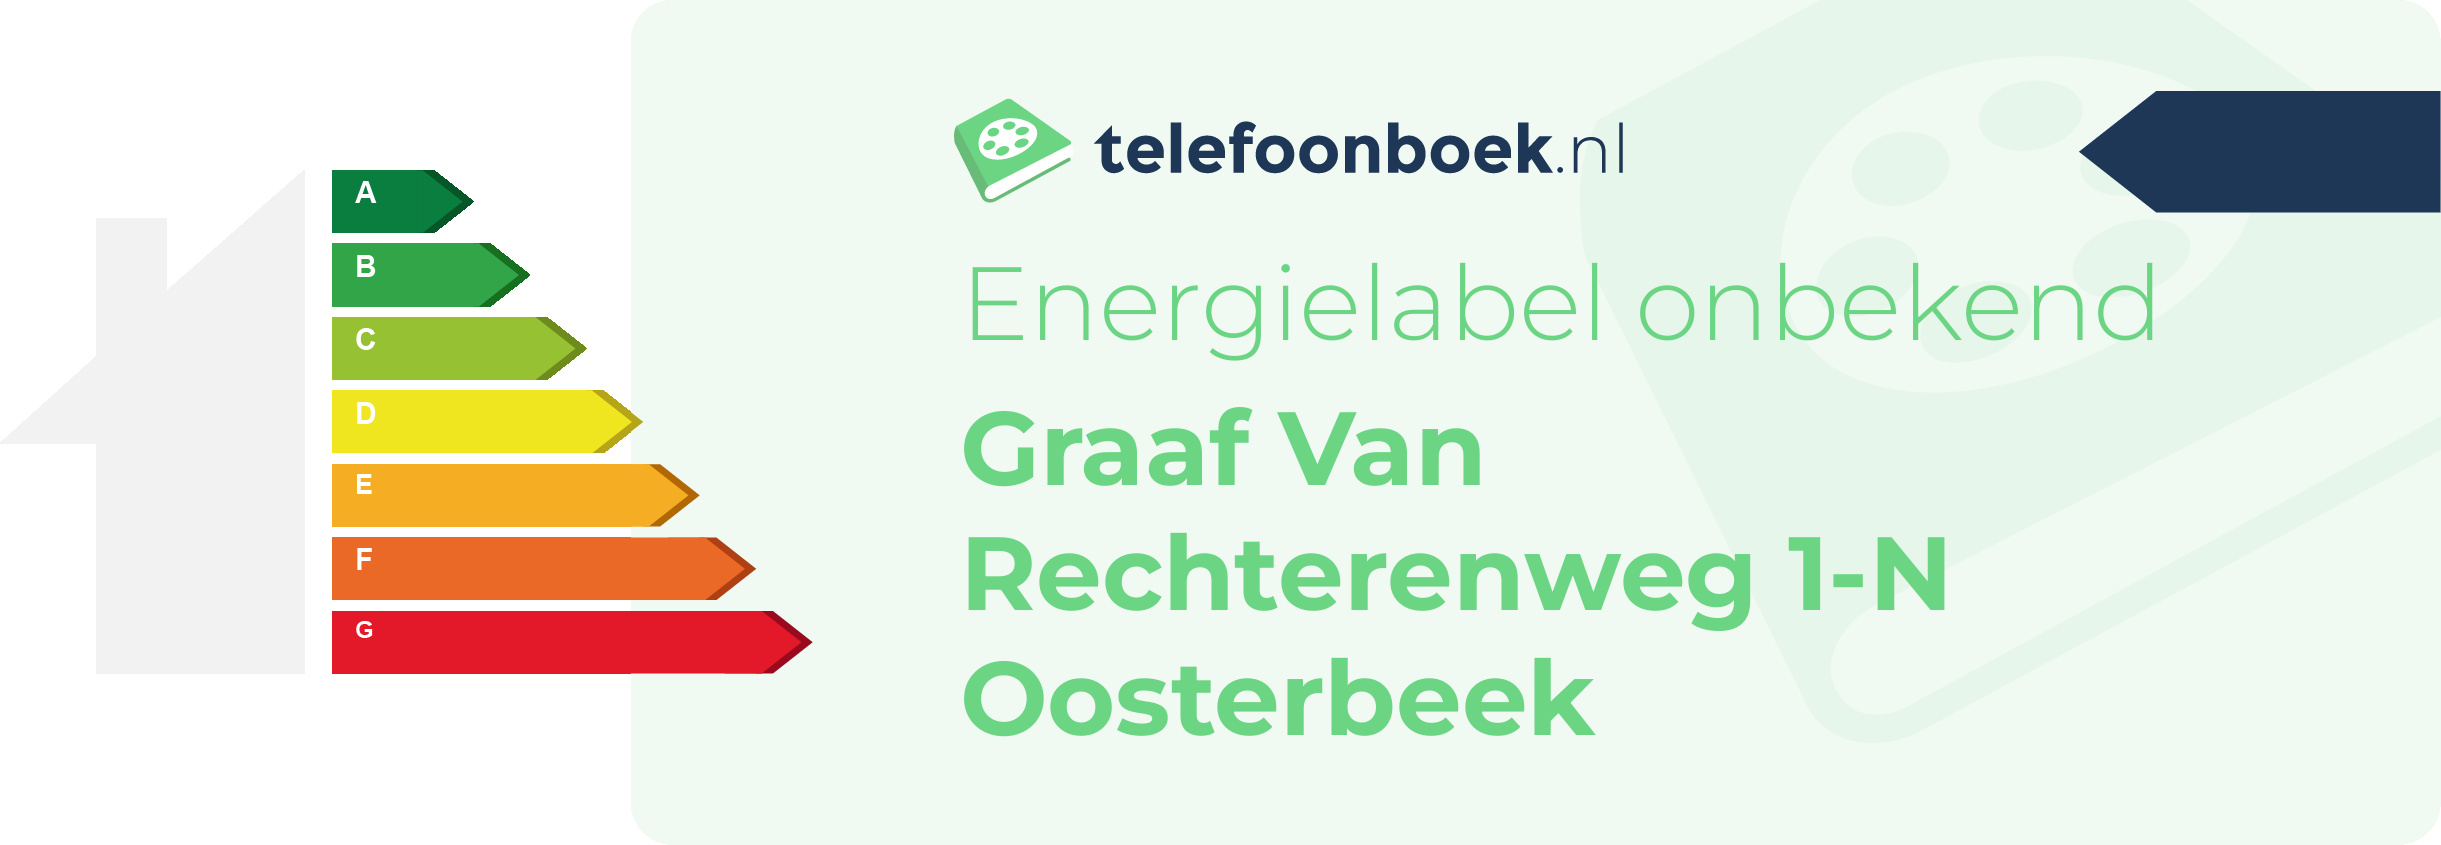 Energielabel Graaf Van Rechterenweg 1-N Oosterbeek